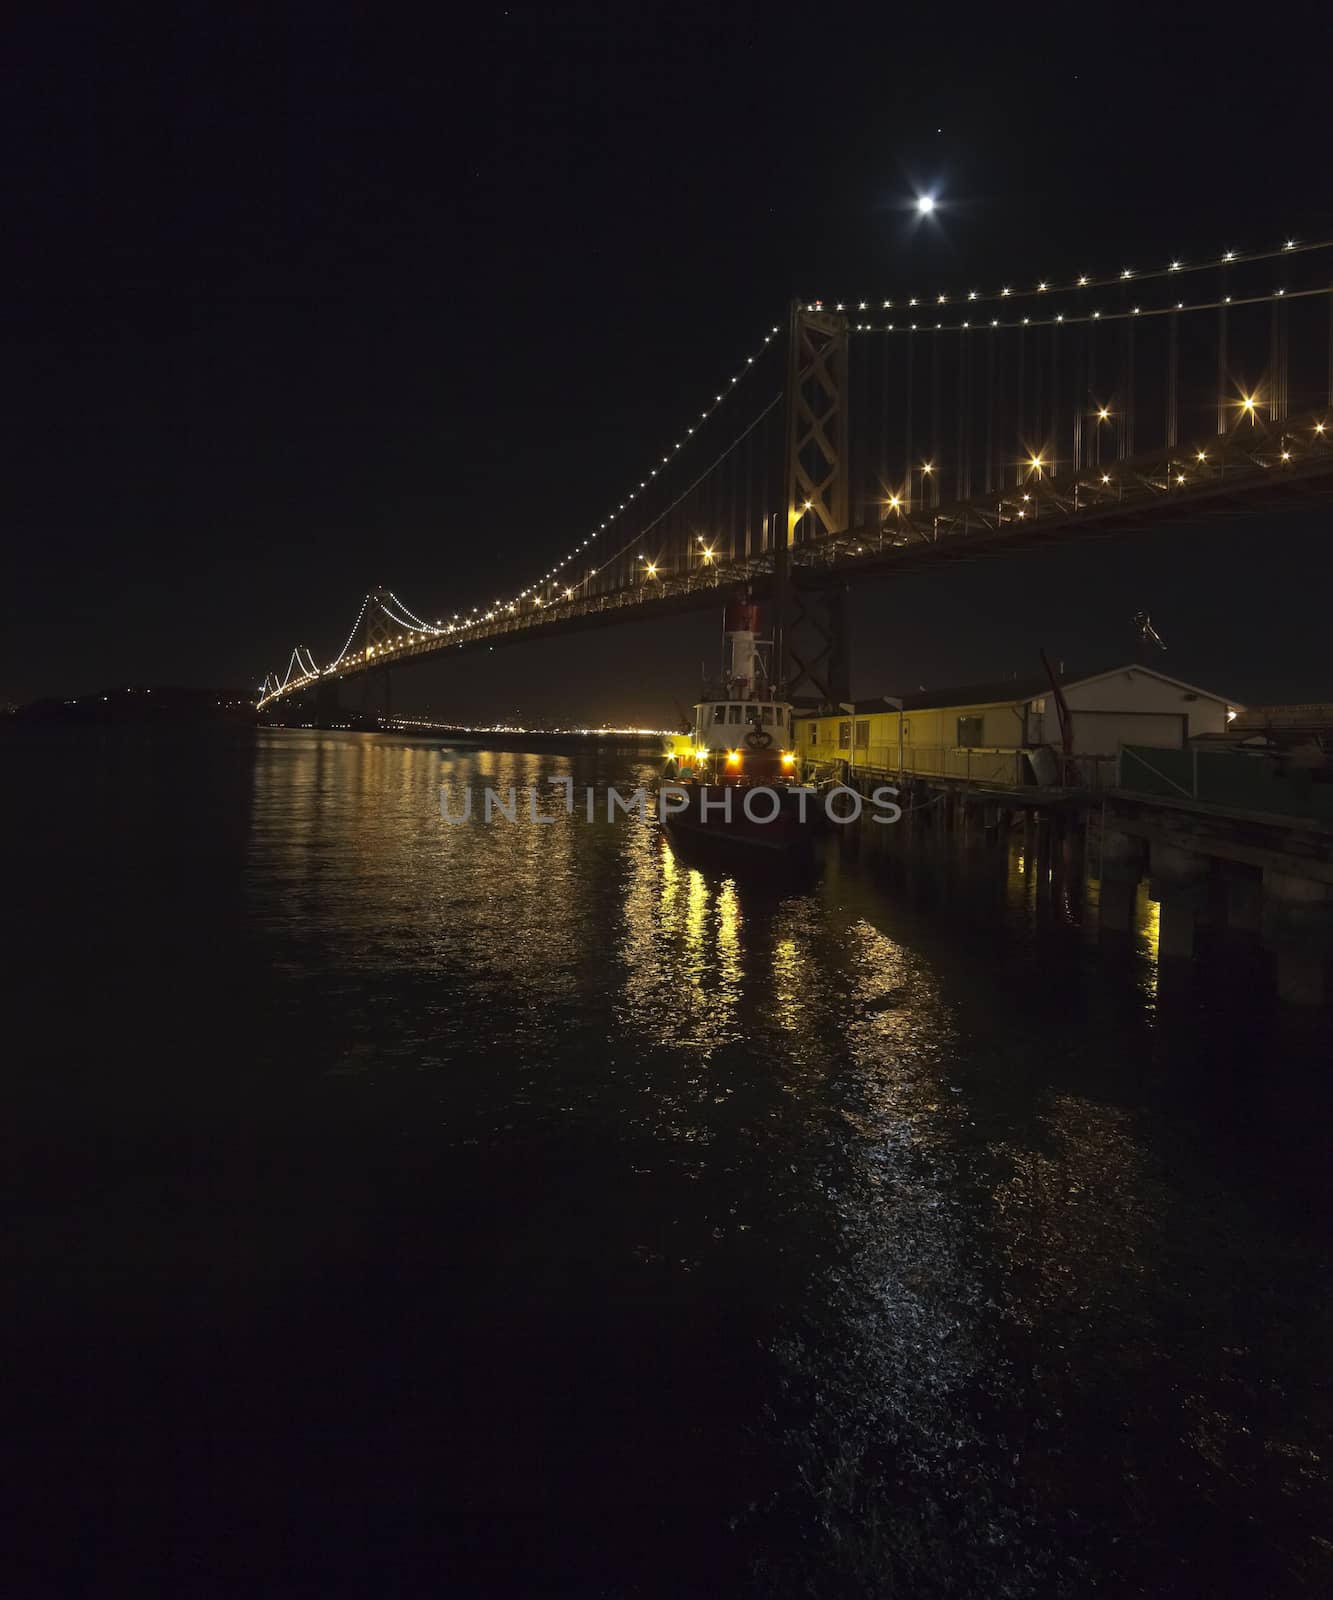 San Francisco Bay bridge in the night by hanusst